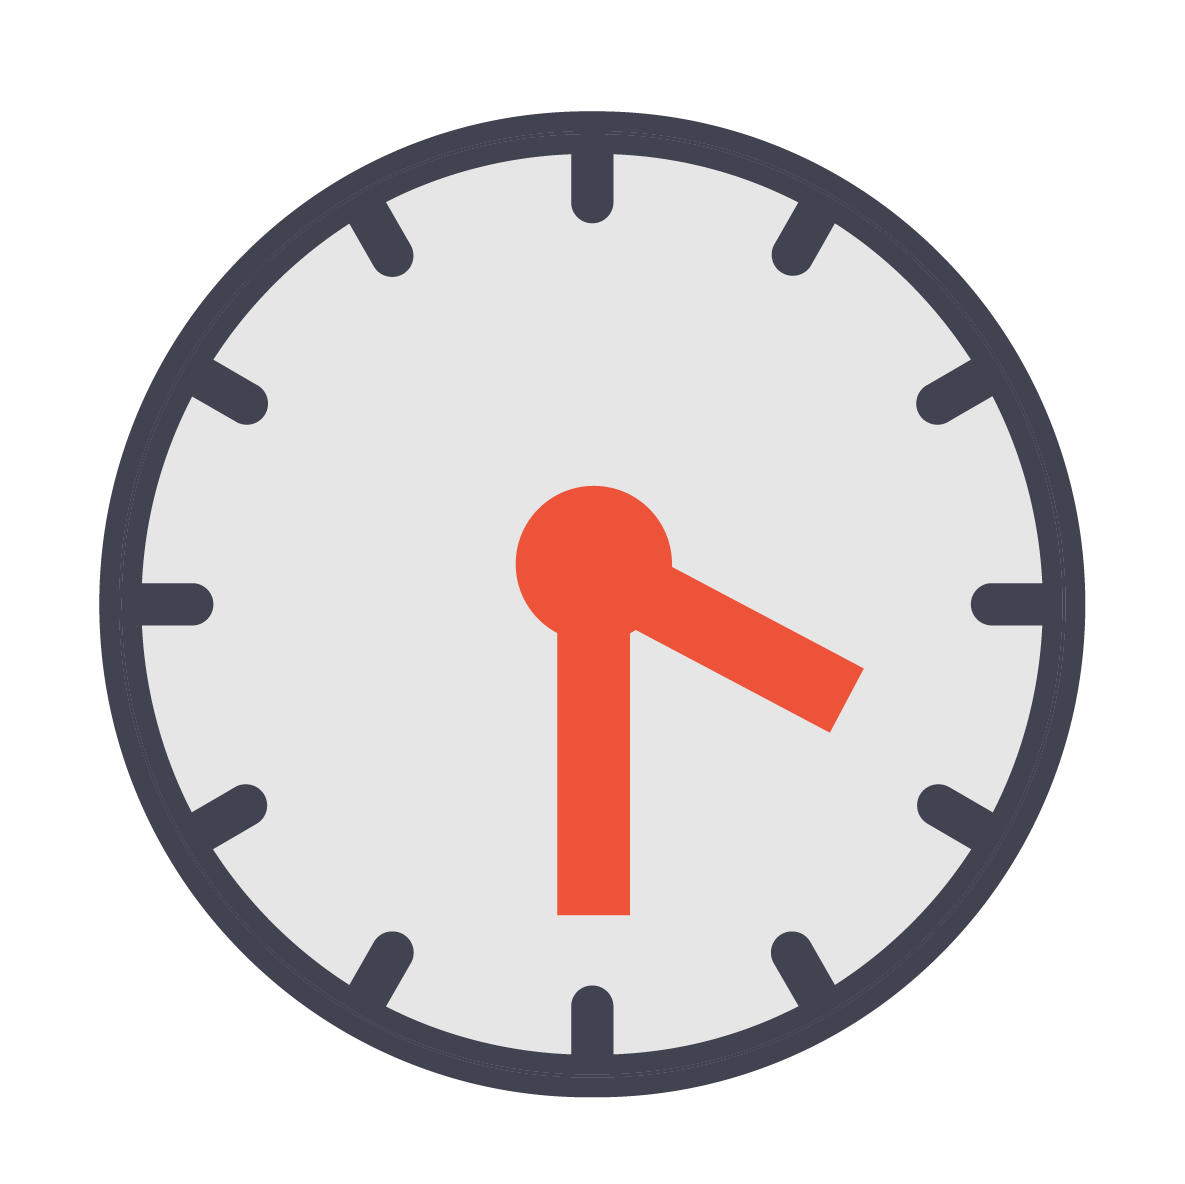 Clock icon showing half past three